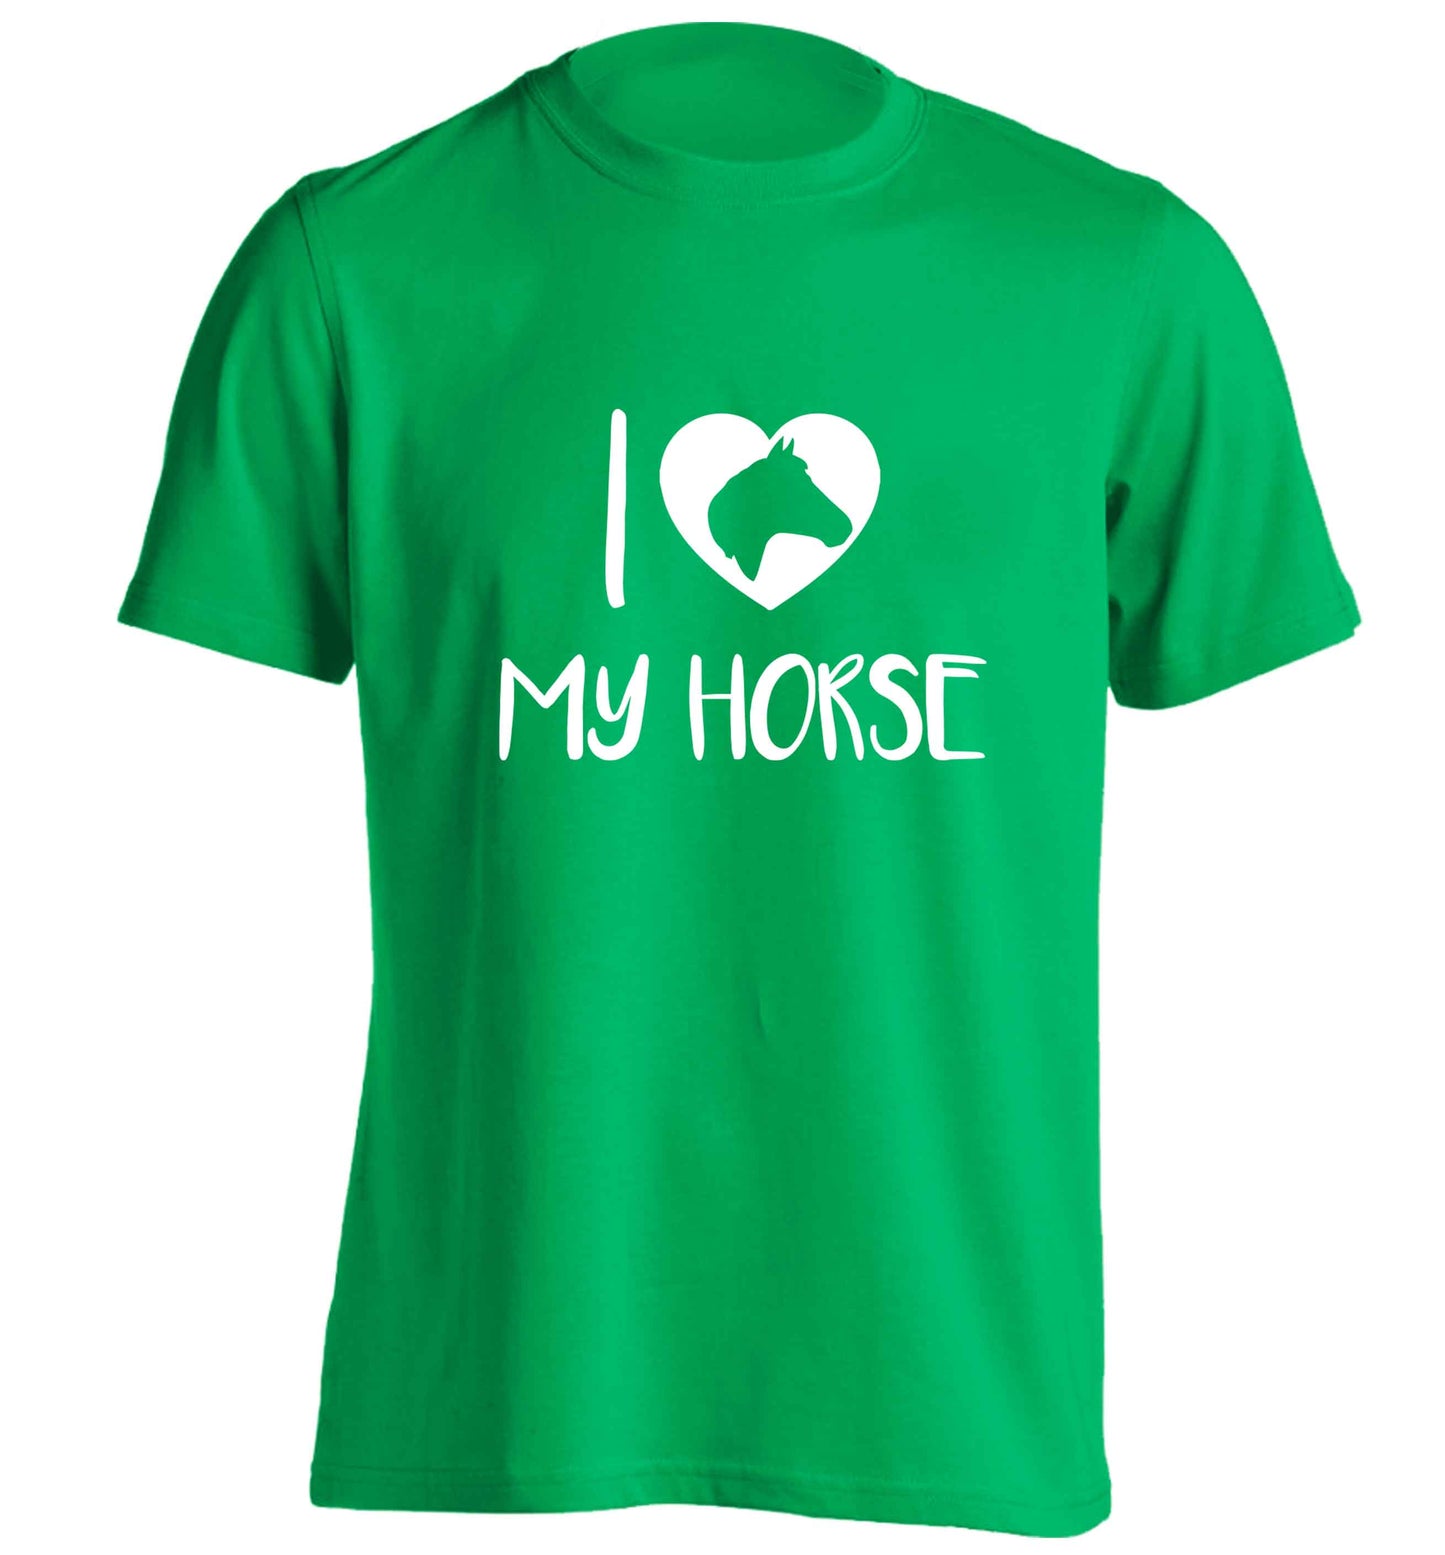 I love my horse adults unisex green Tshirt 2XL